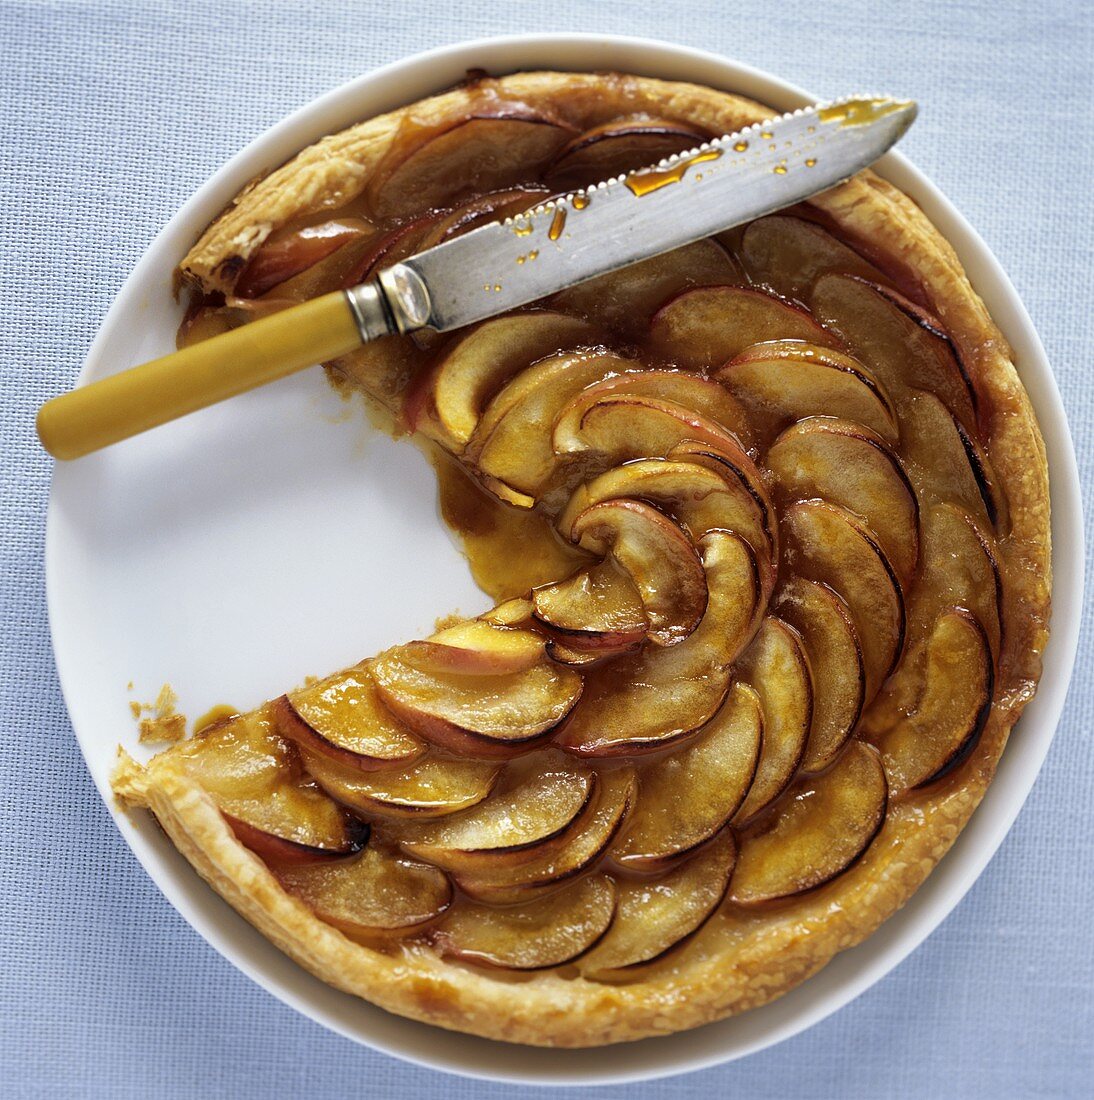 Apple tart with knife